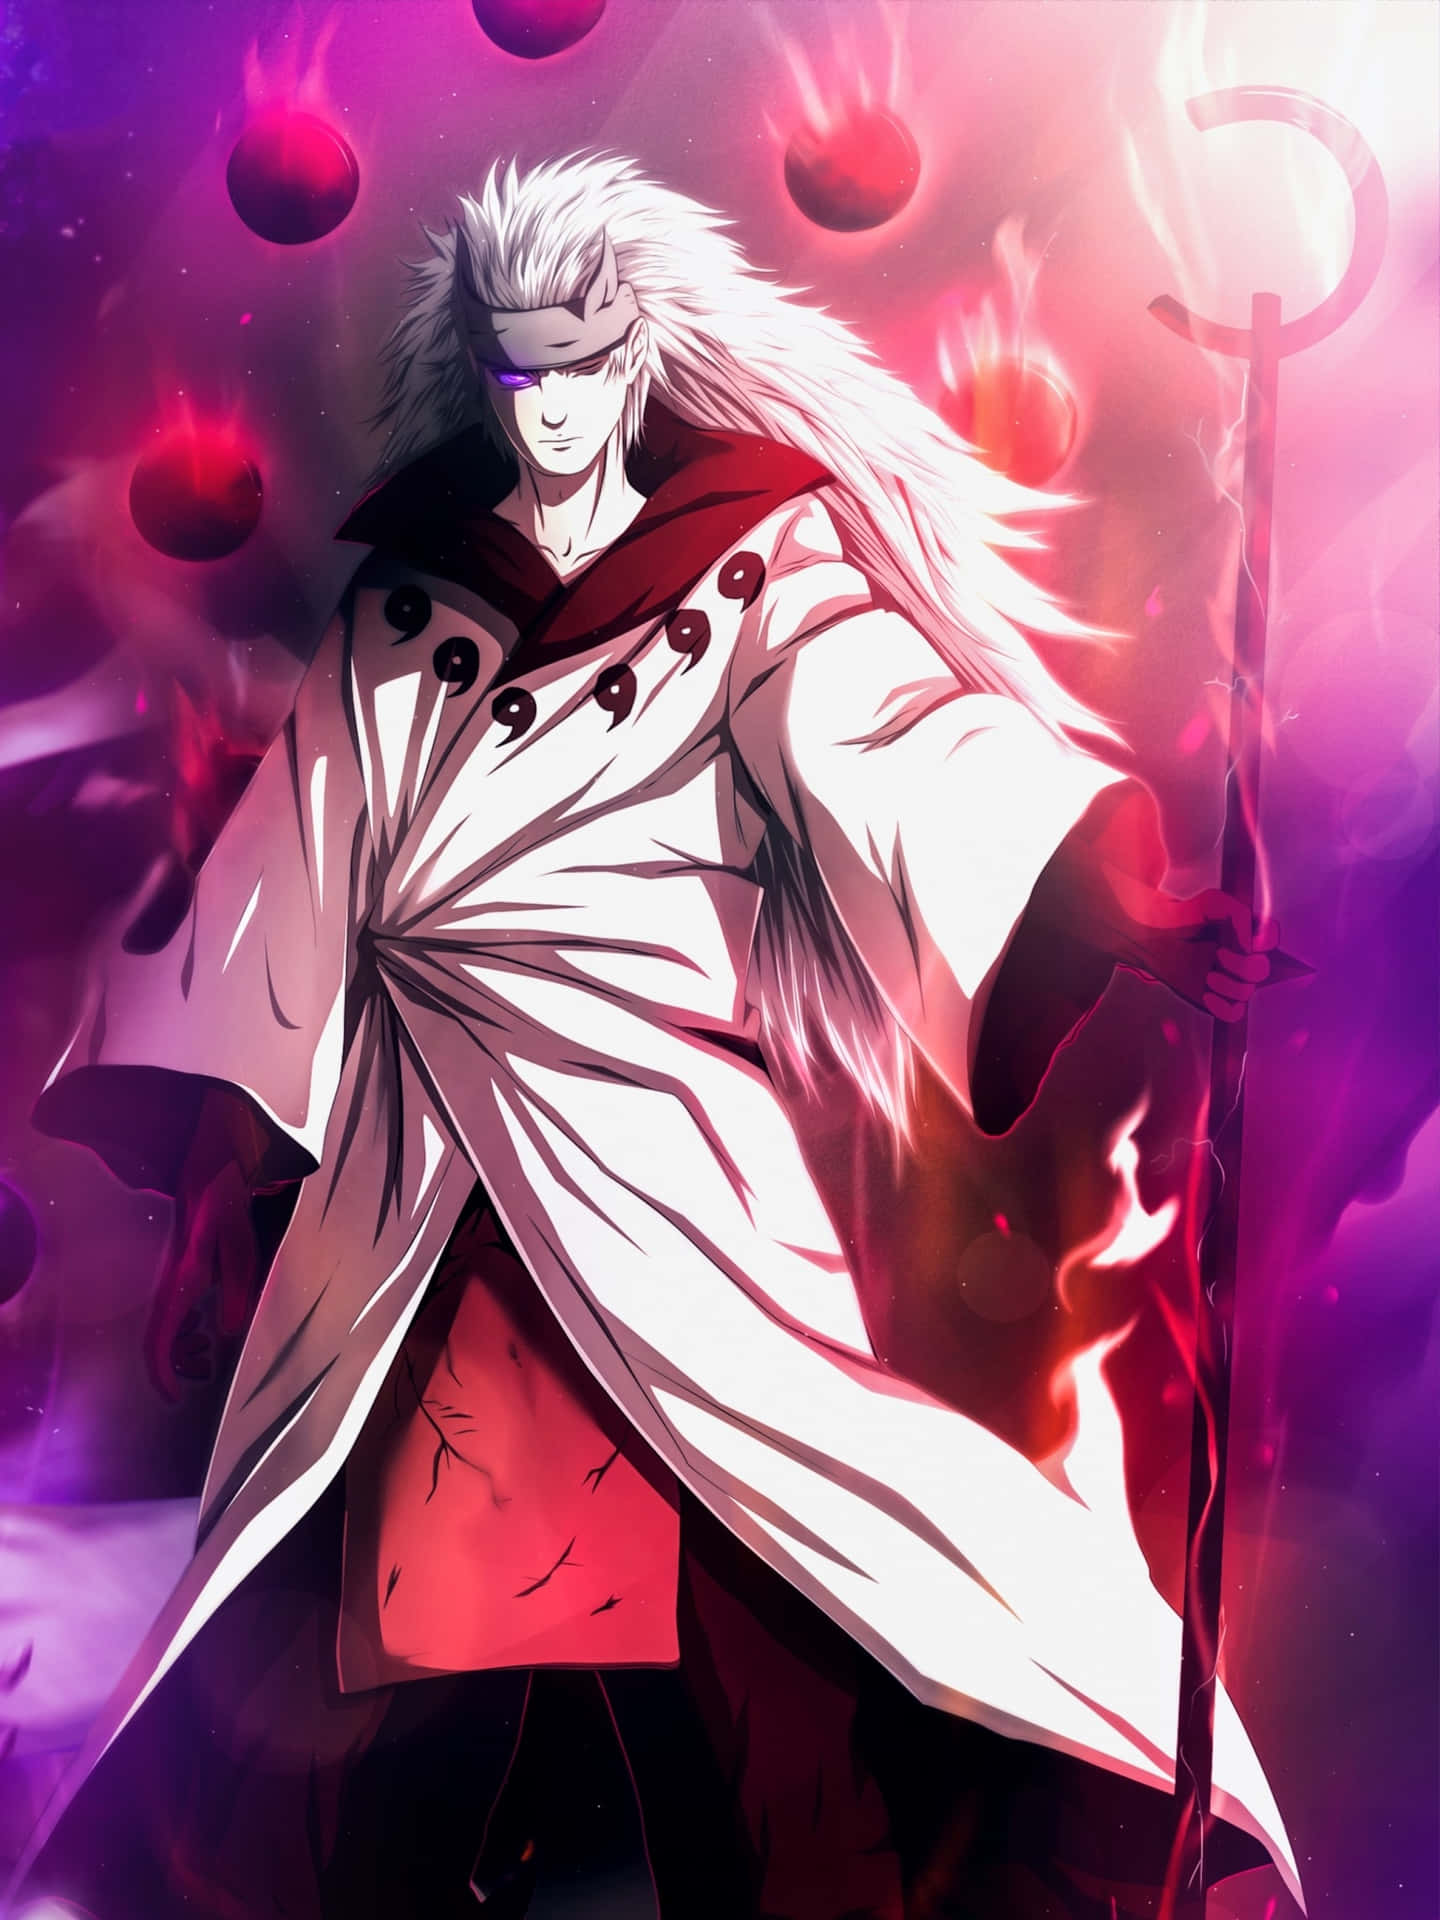 Madara Uchiha, a powerful ninja from the Naruto series Wallpaper